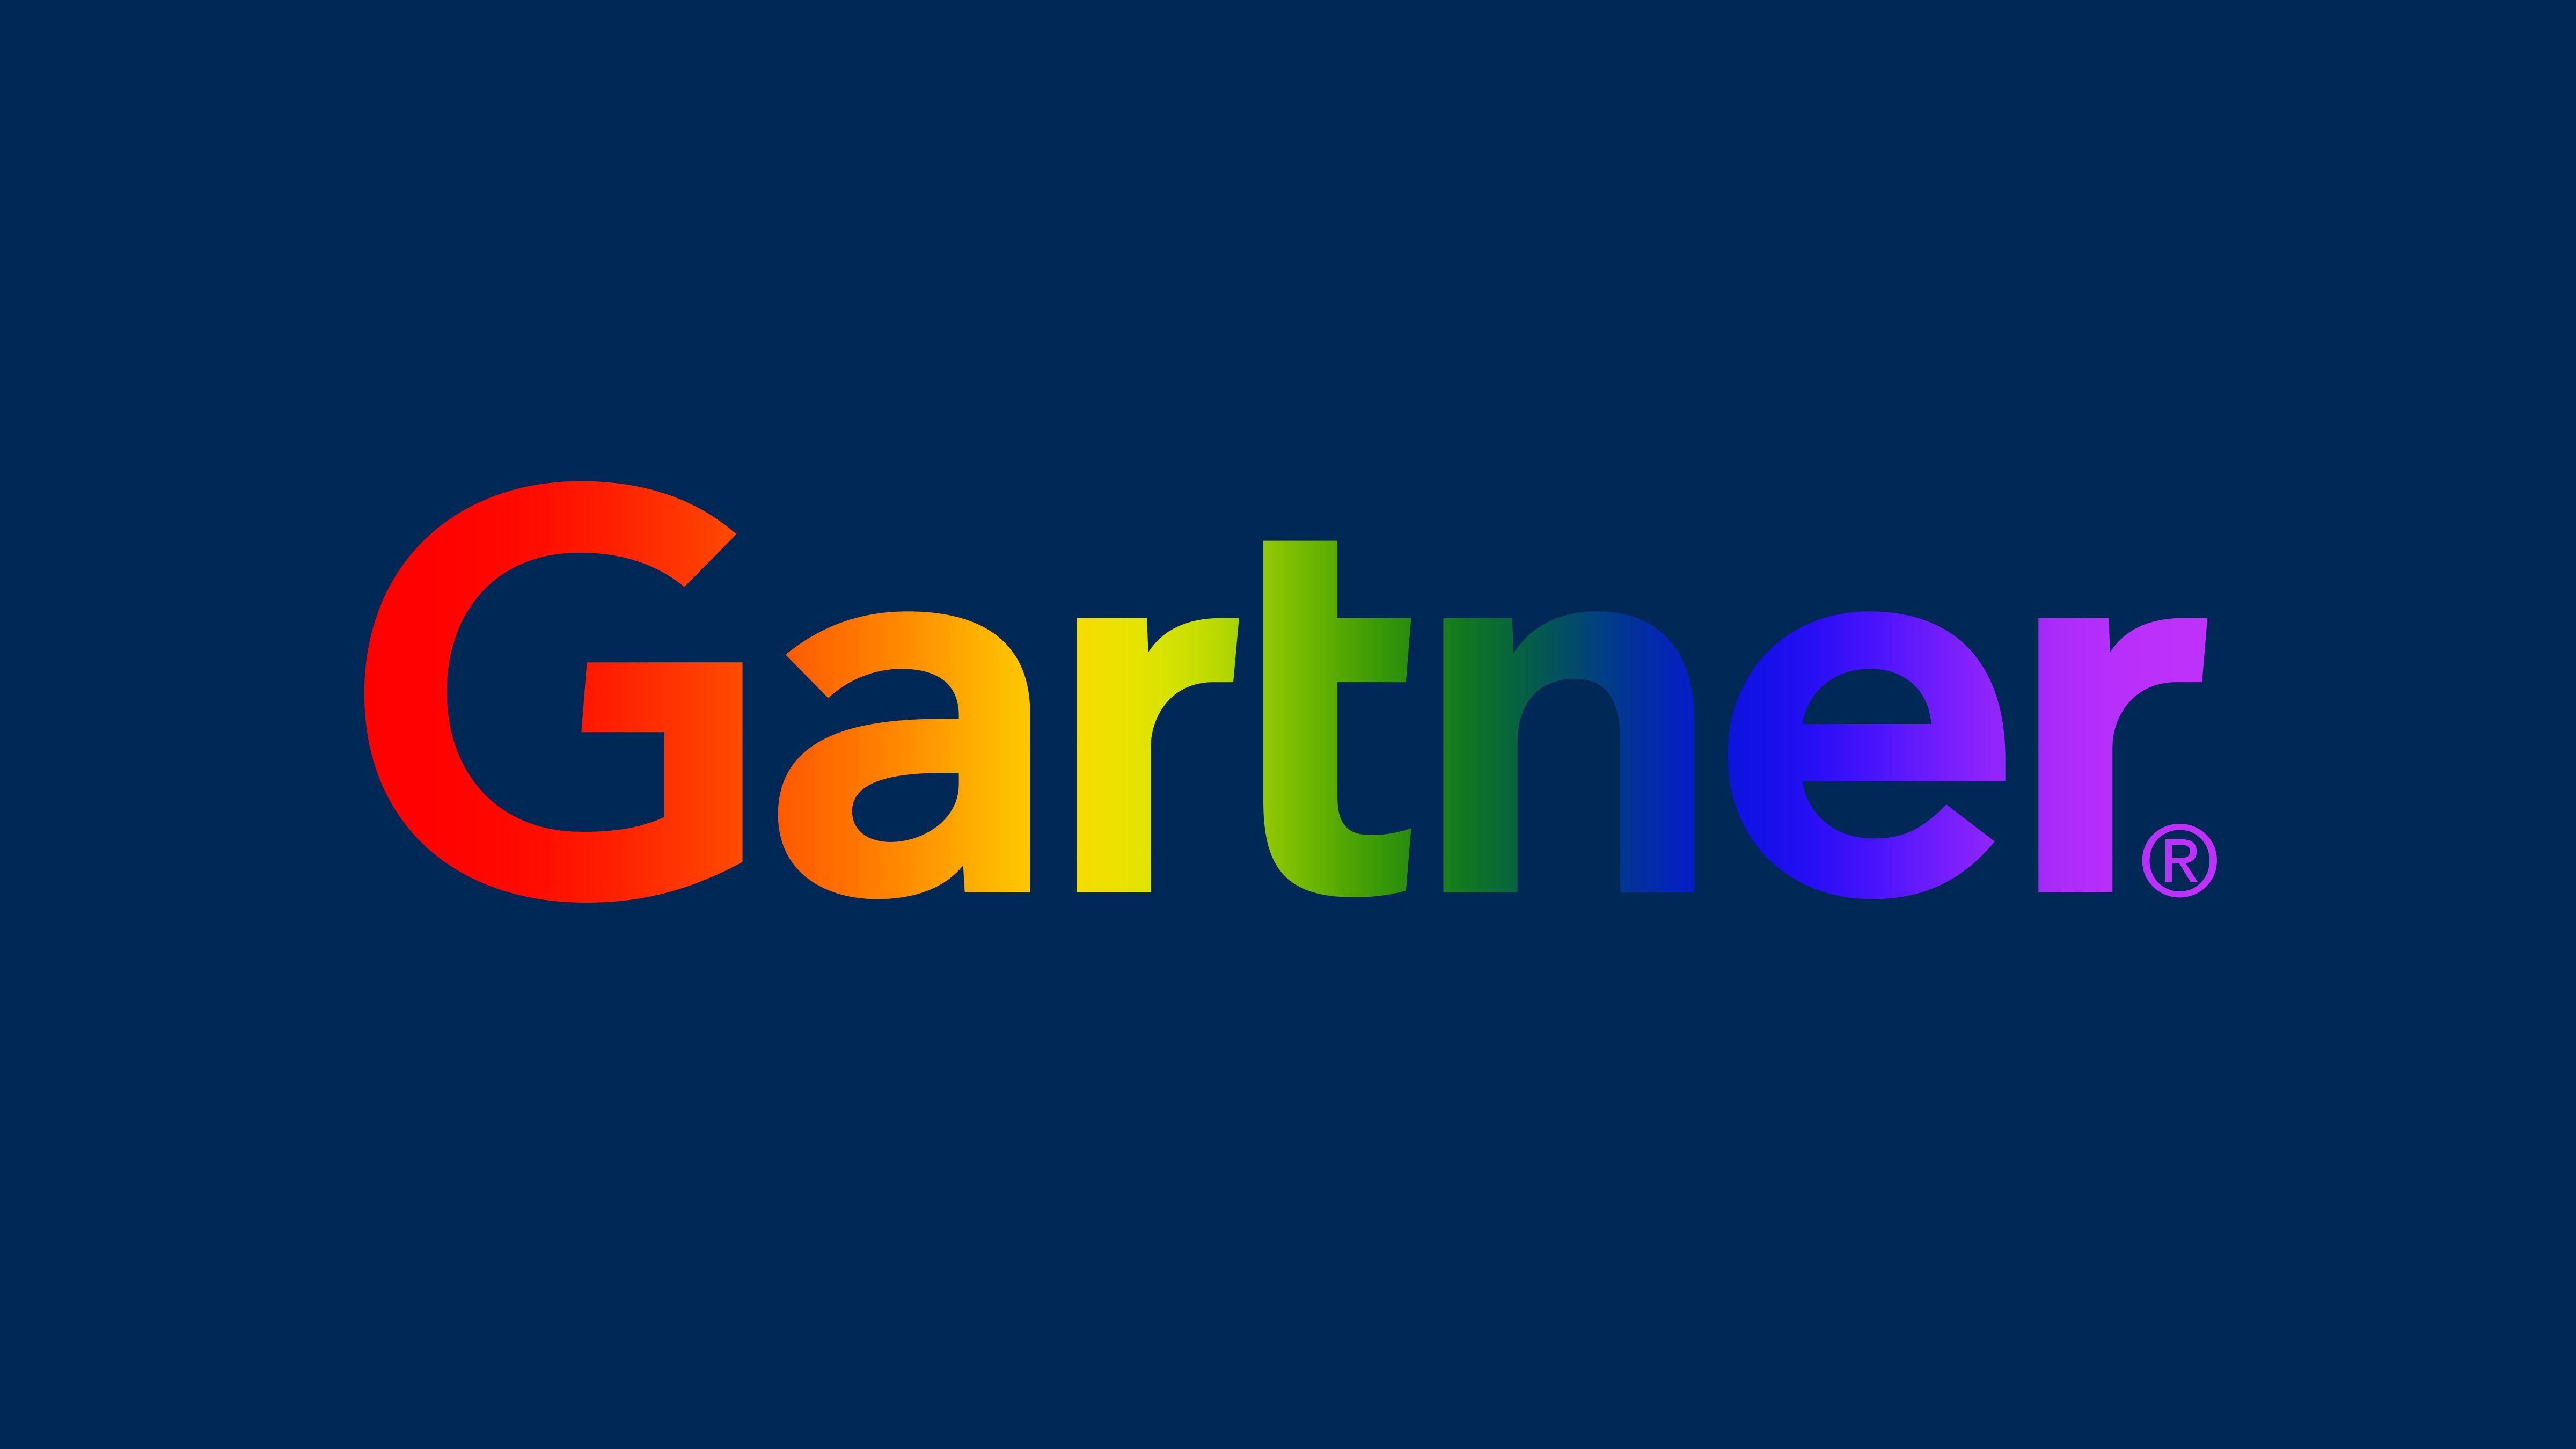 Gartner Logo - Life At Gartner Archives - Page 5 of 12 - Gartner Careers Blog